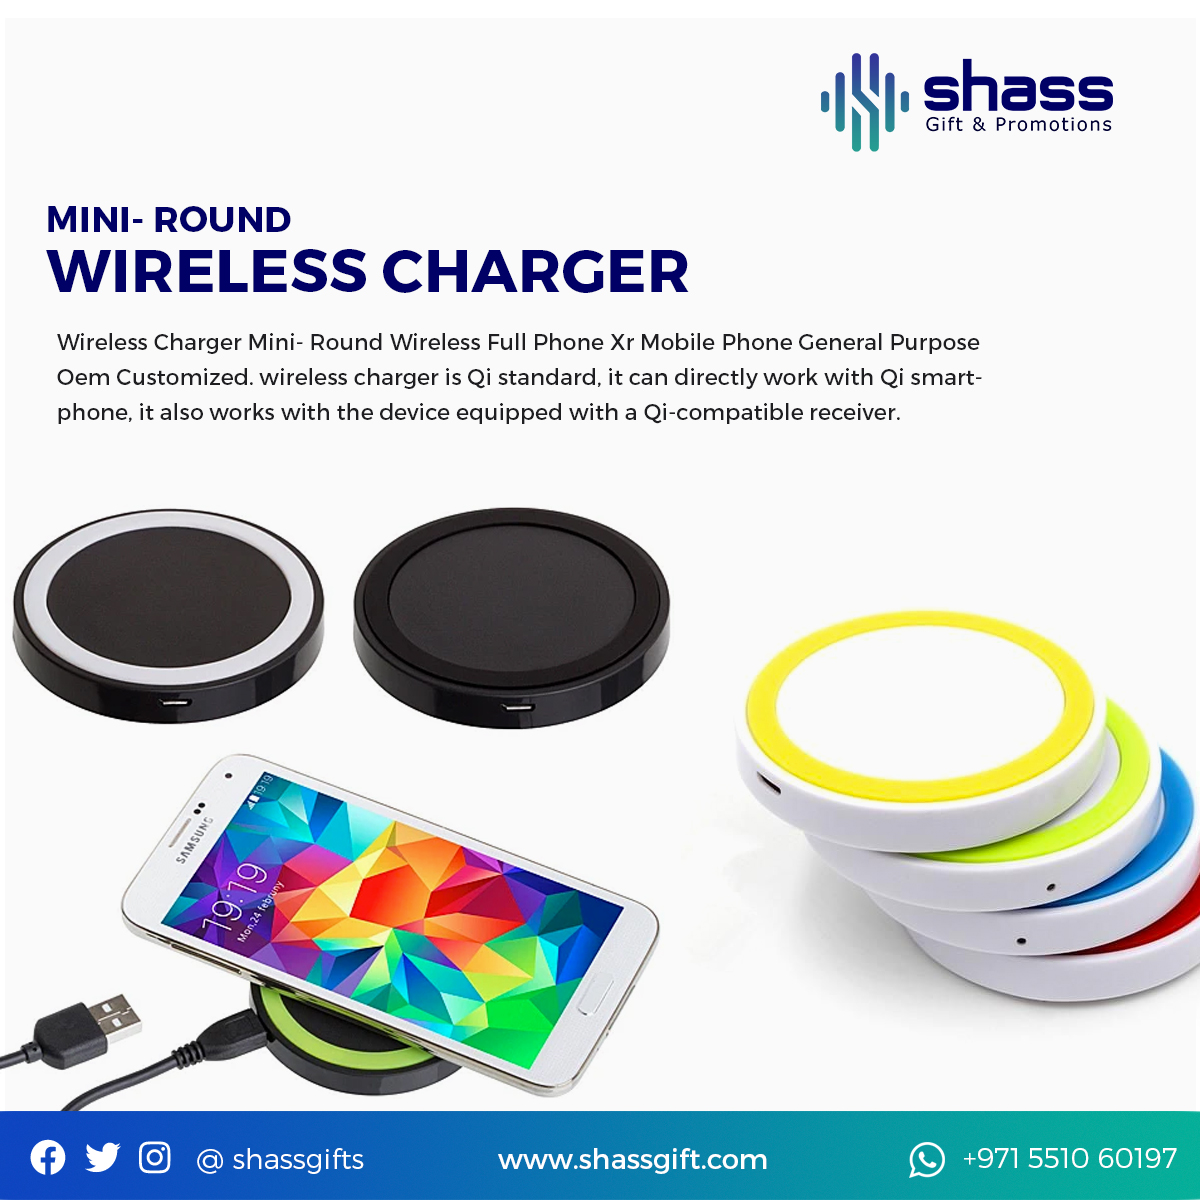 Mini Round Wireless Charger